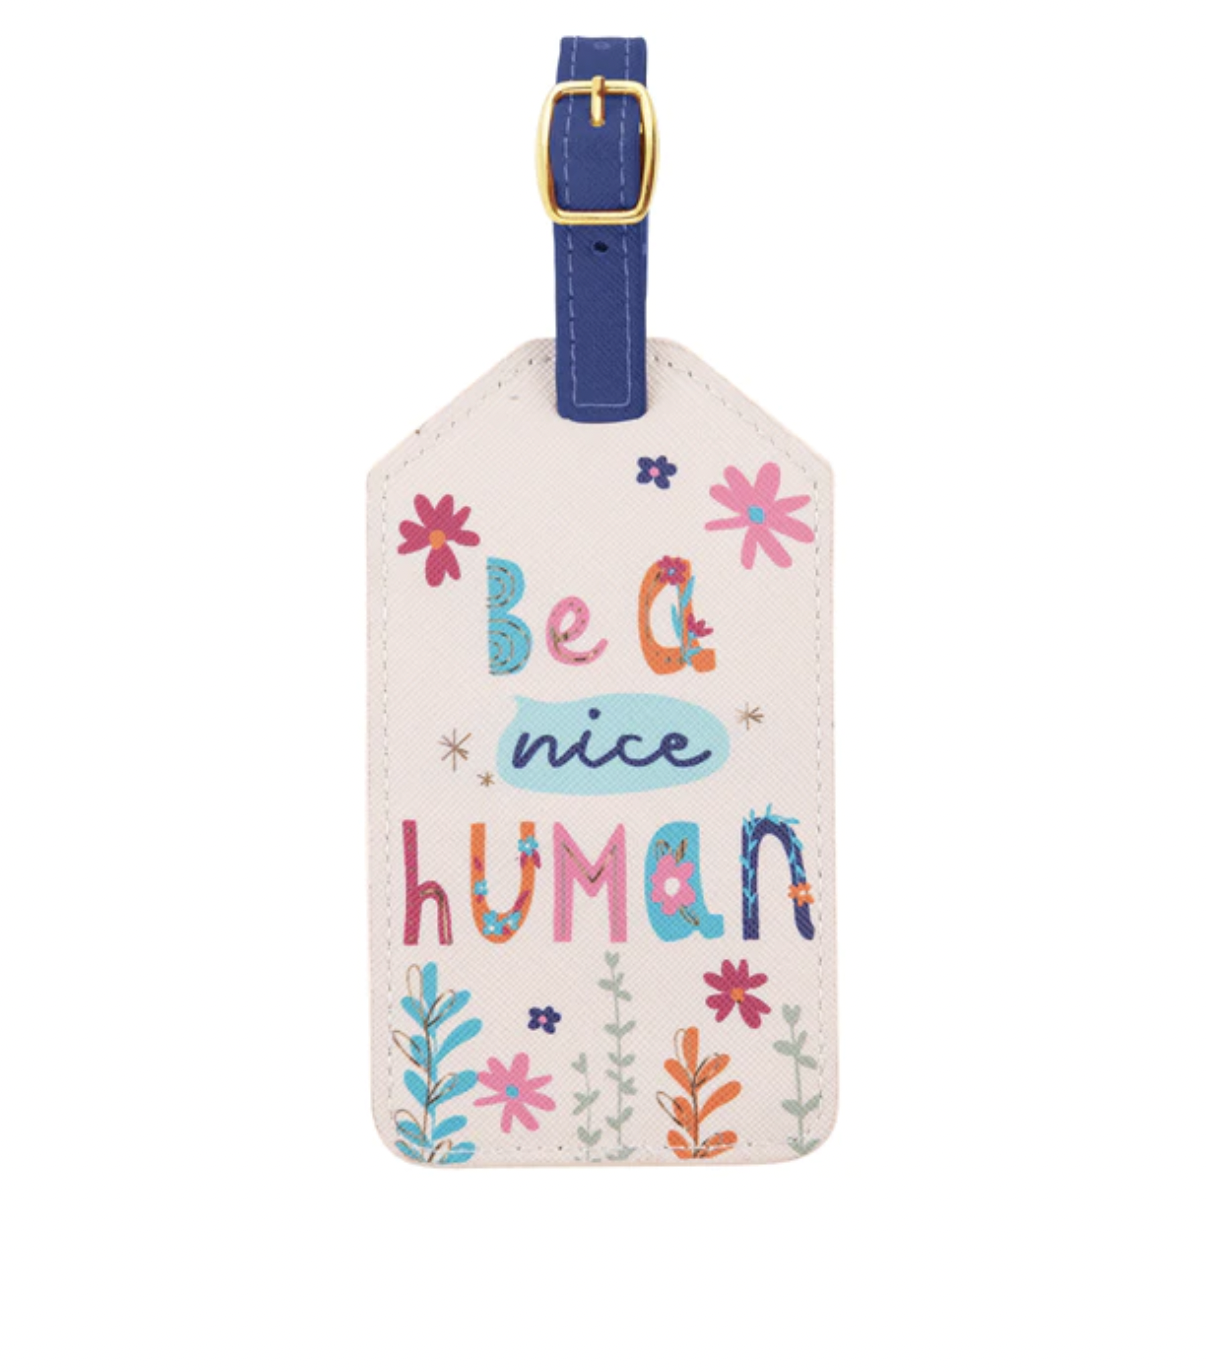 "Be A Nice Human" Luggage Tag's